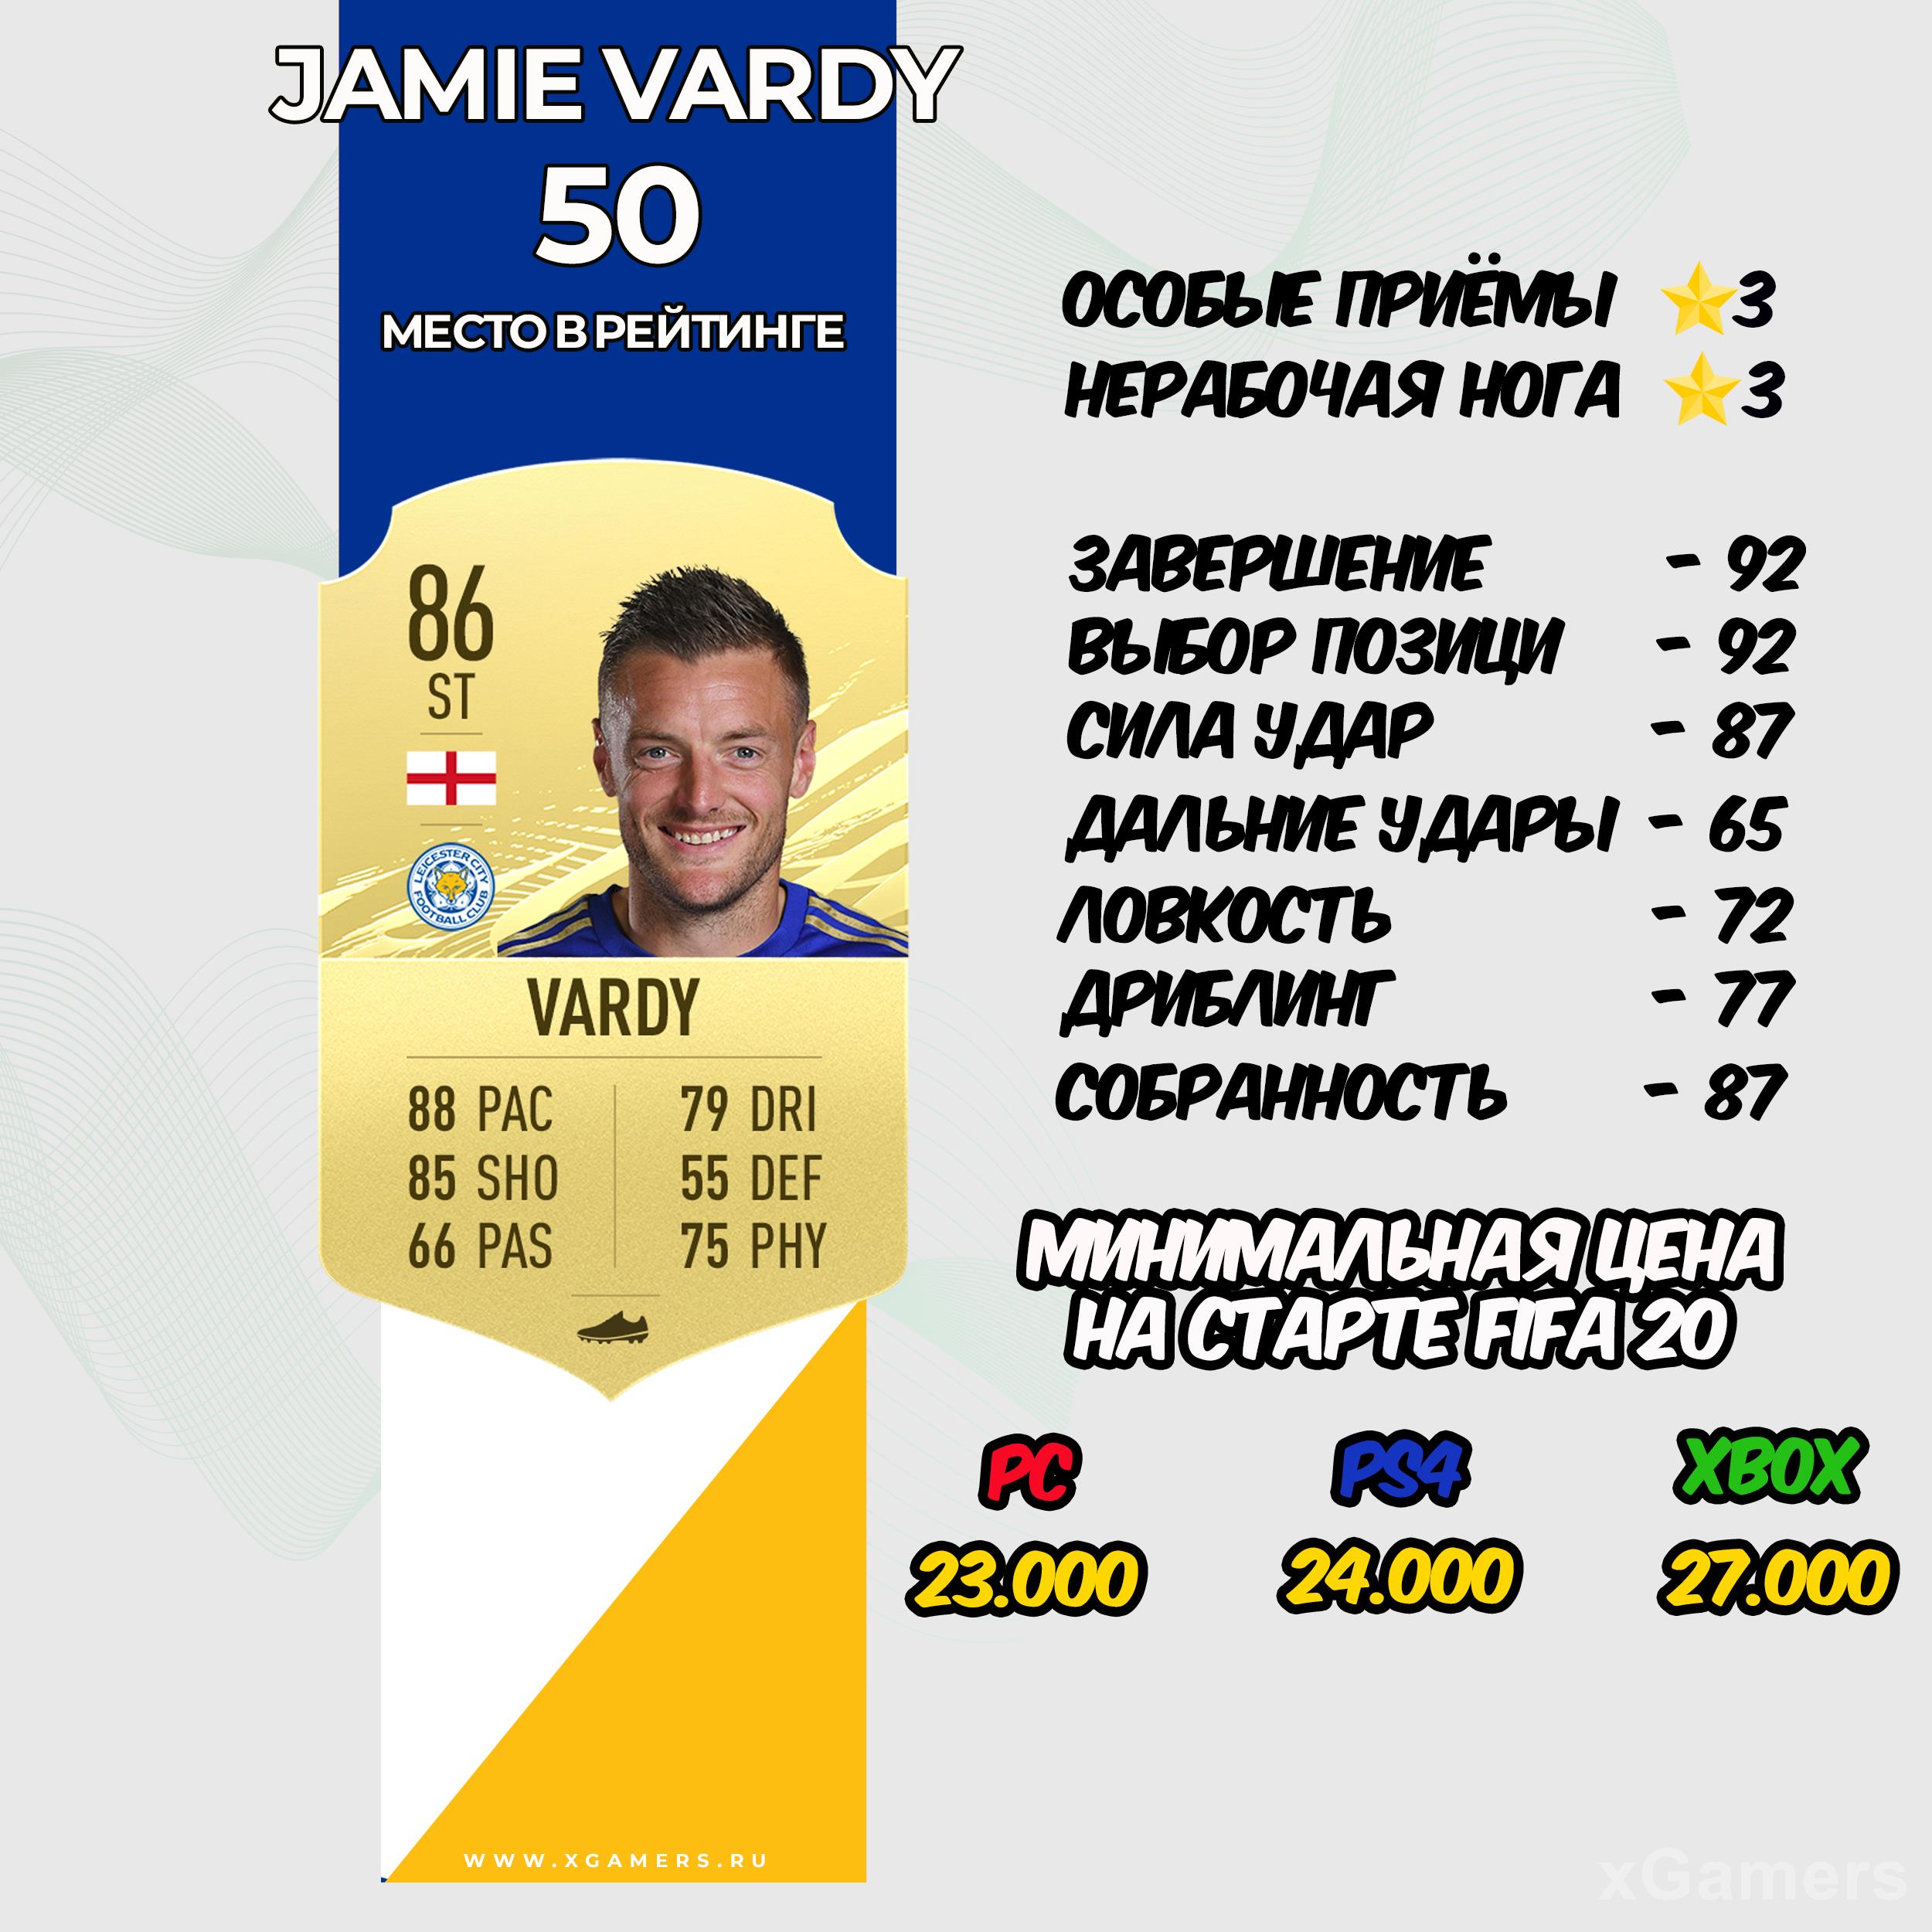 Jamie Vardy - место в рейтинге 50